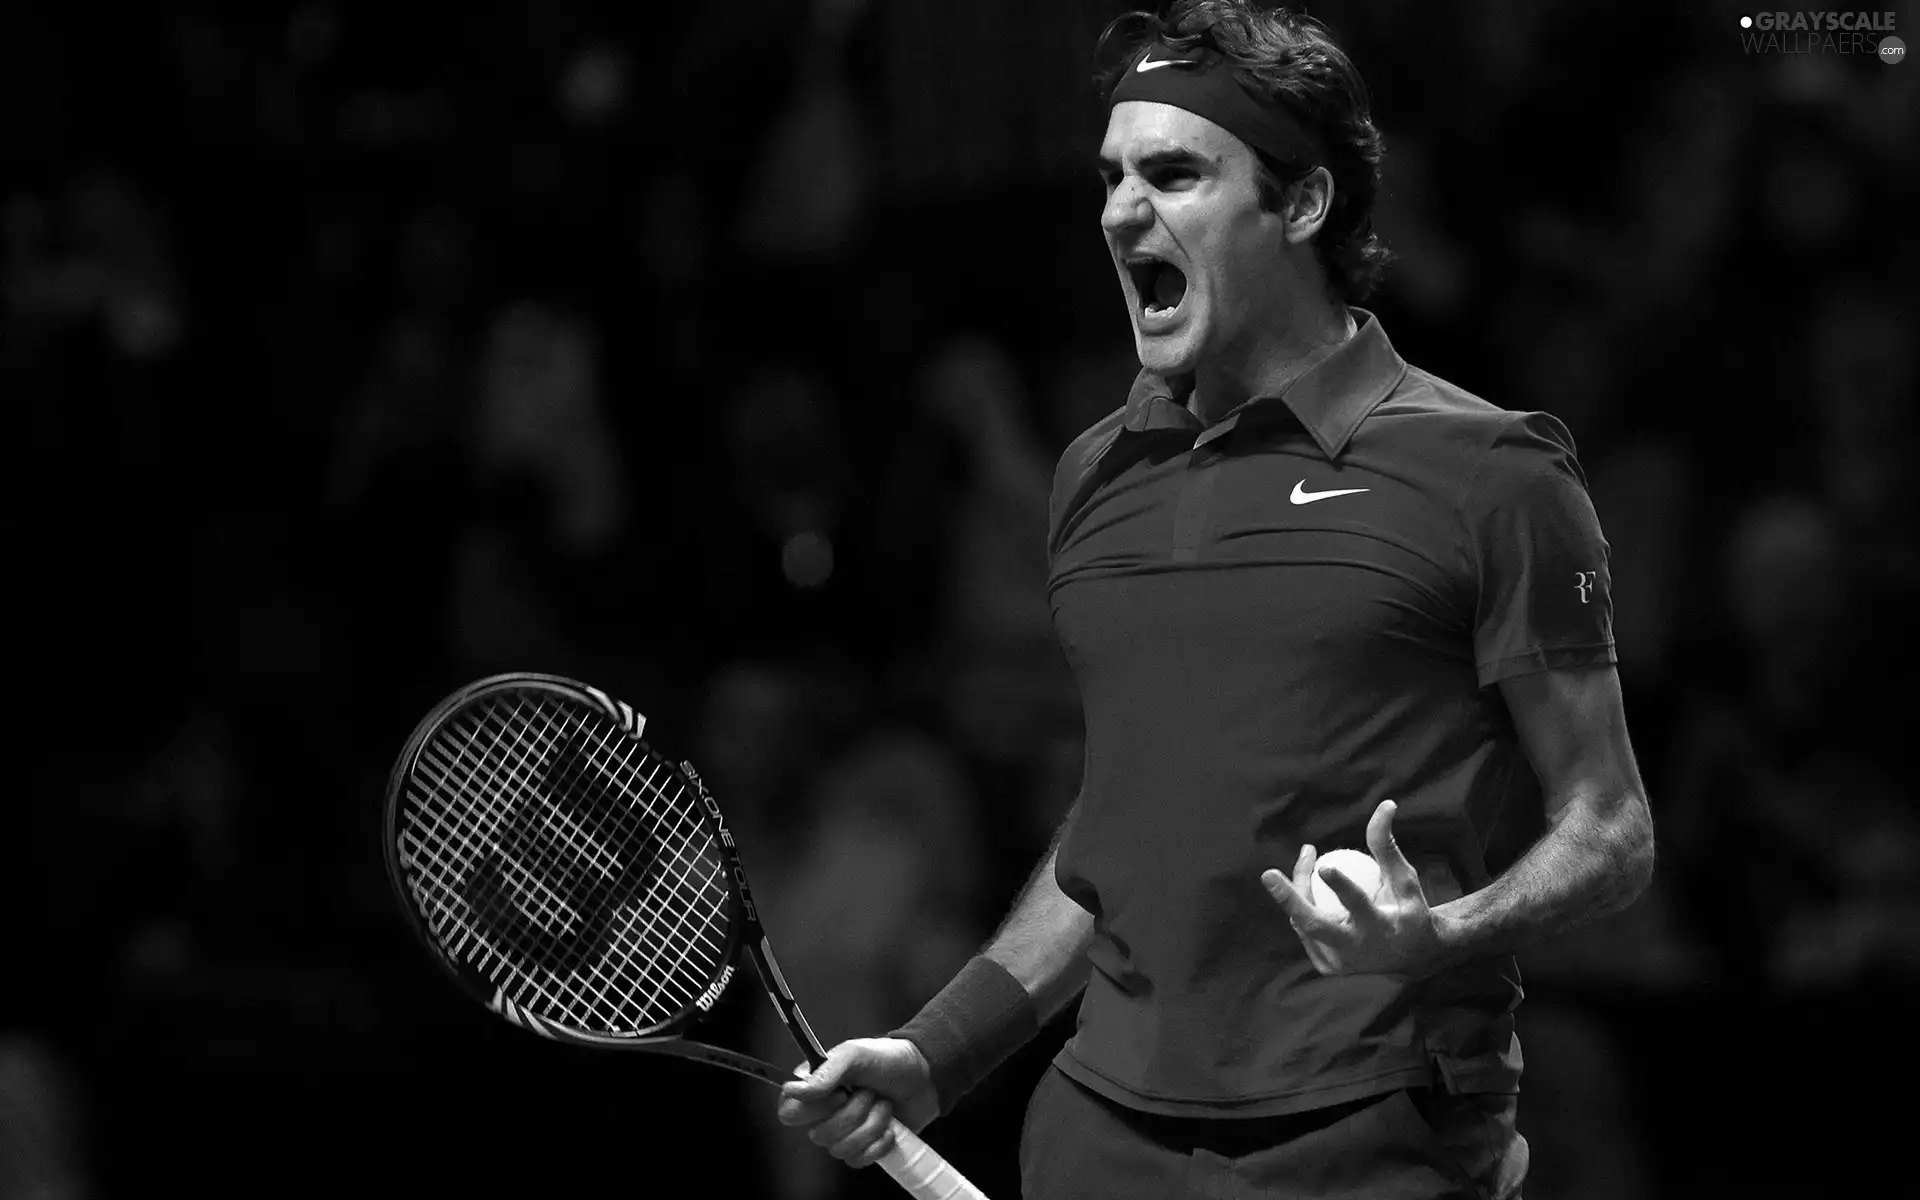 Roger Federer, Swiss, Tennis player